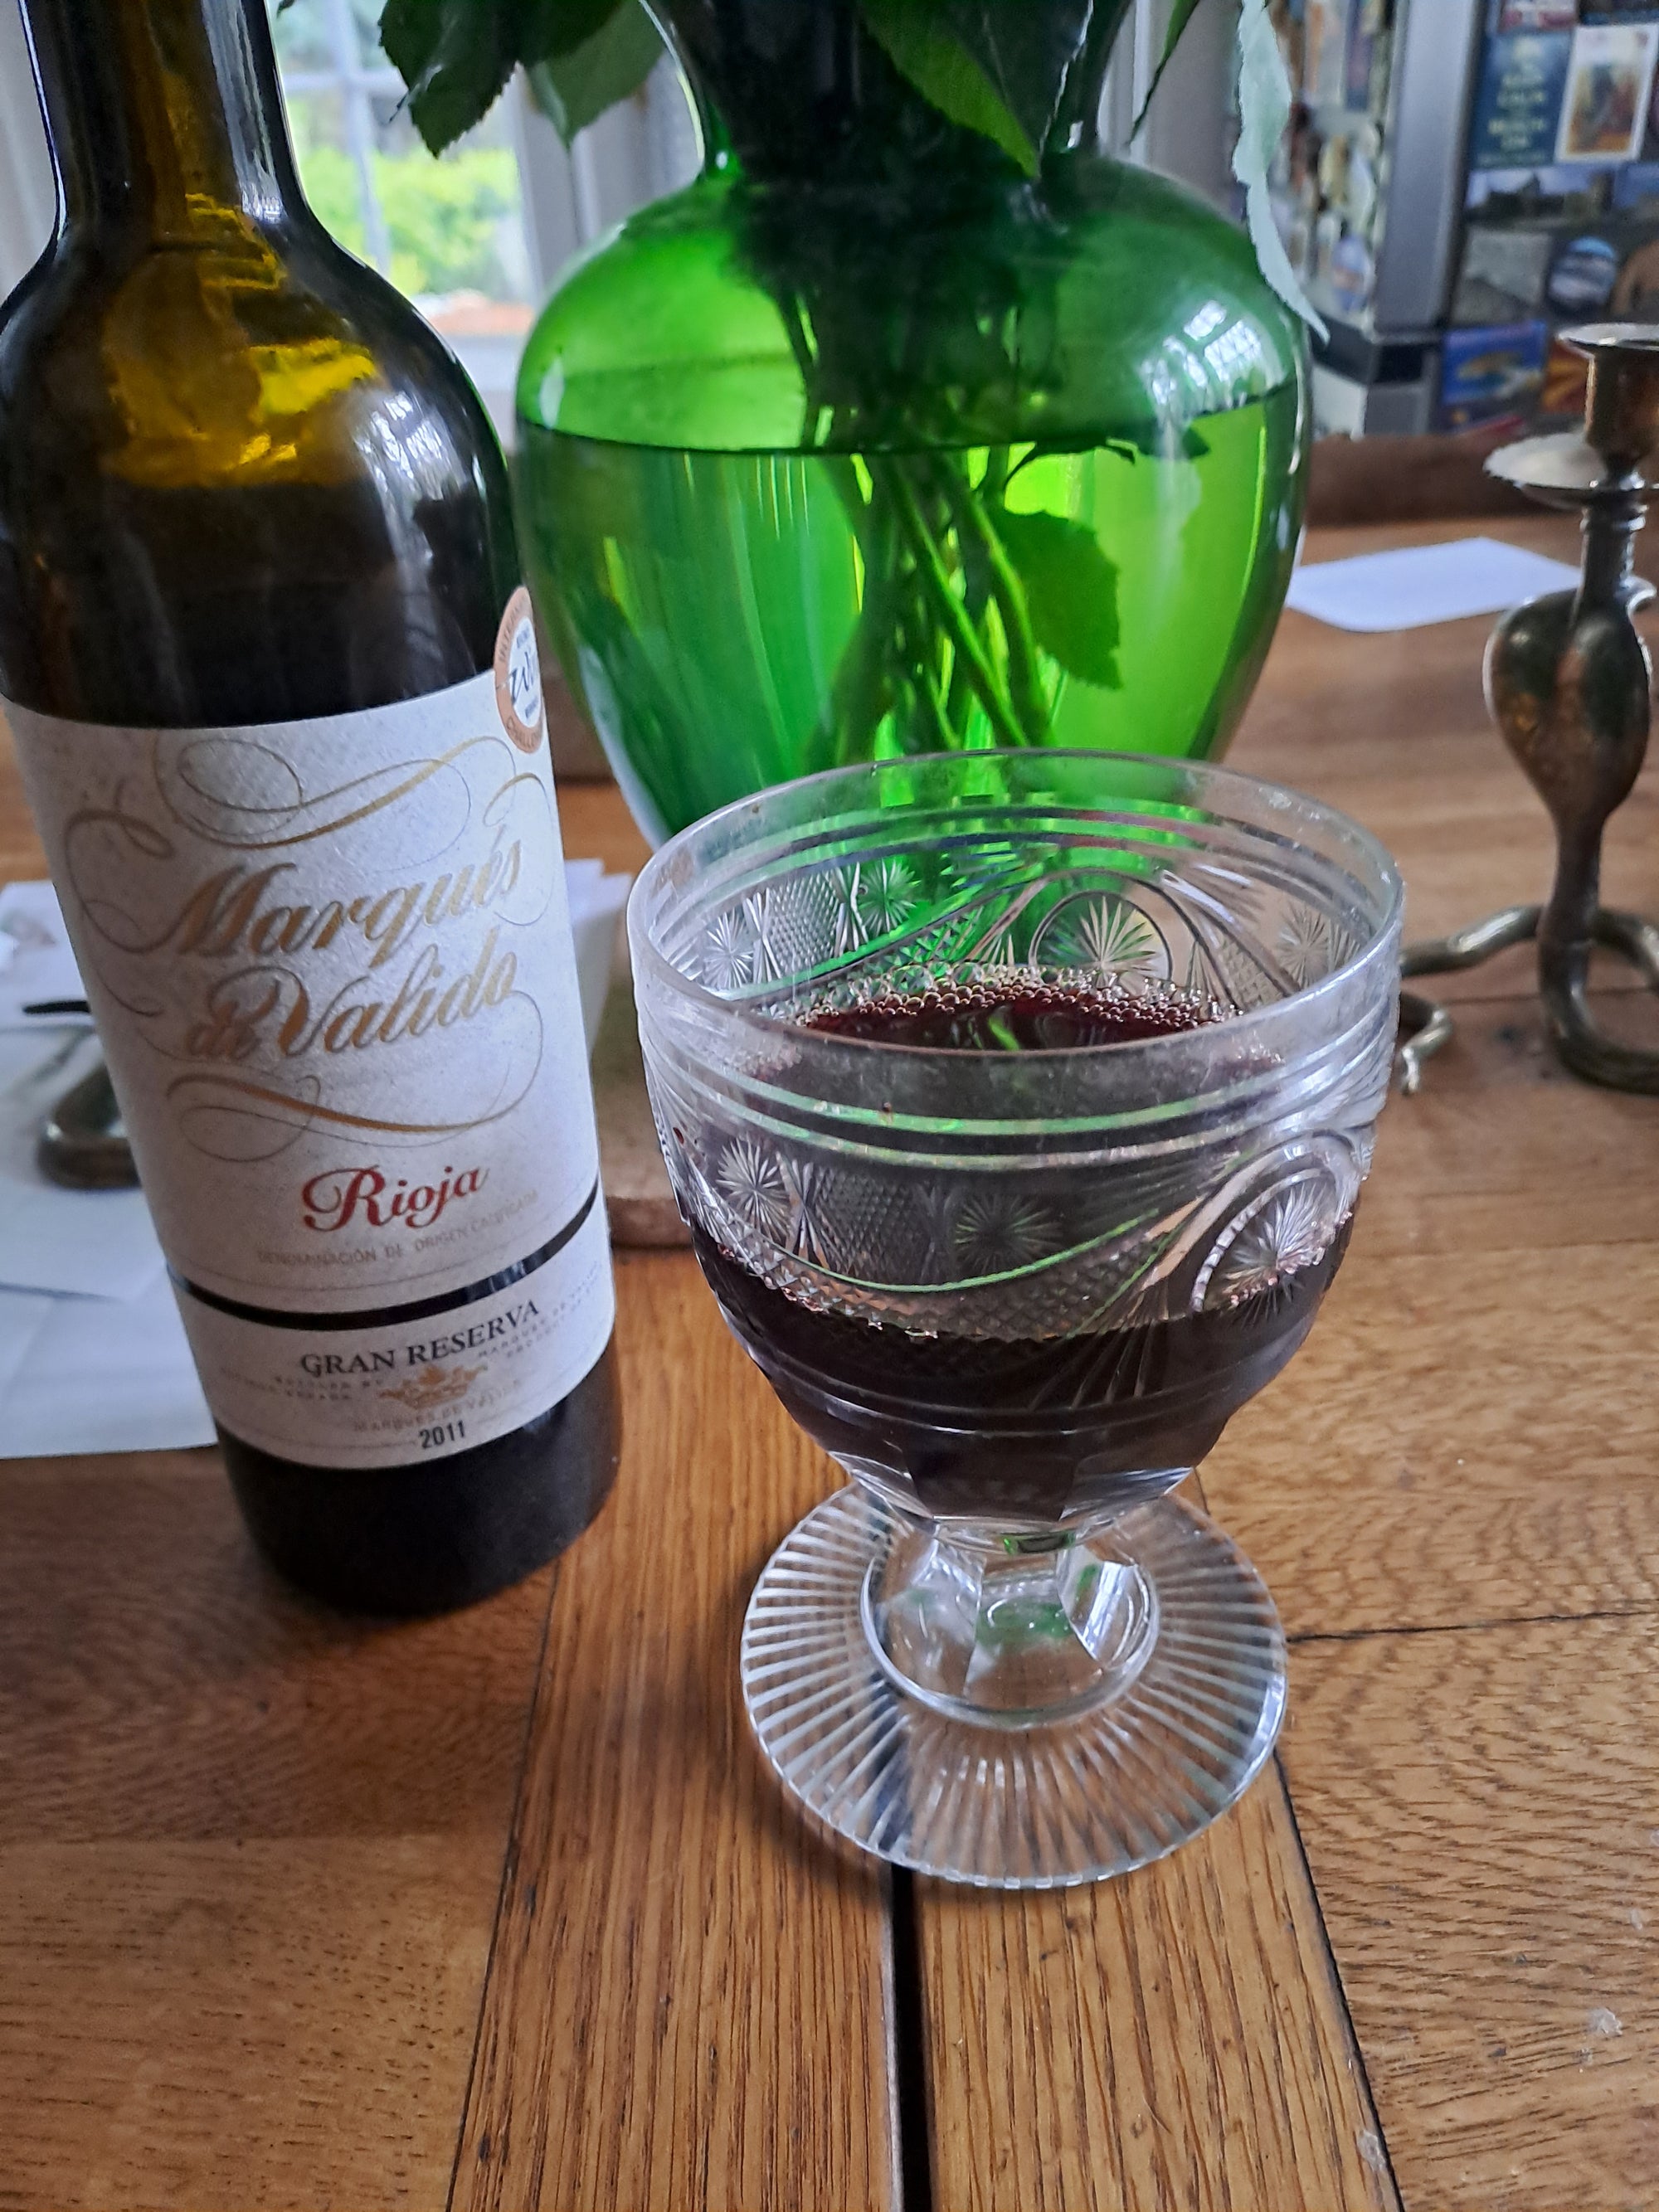 An antique glass makes even ordinary wine taste like fine wine